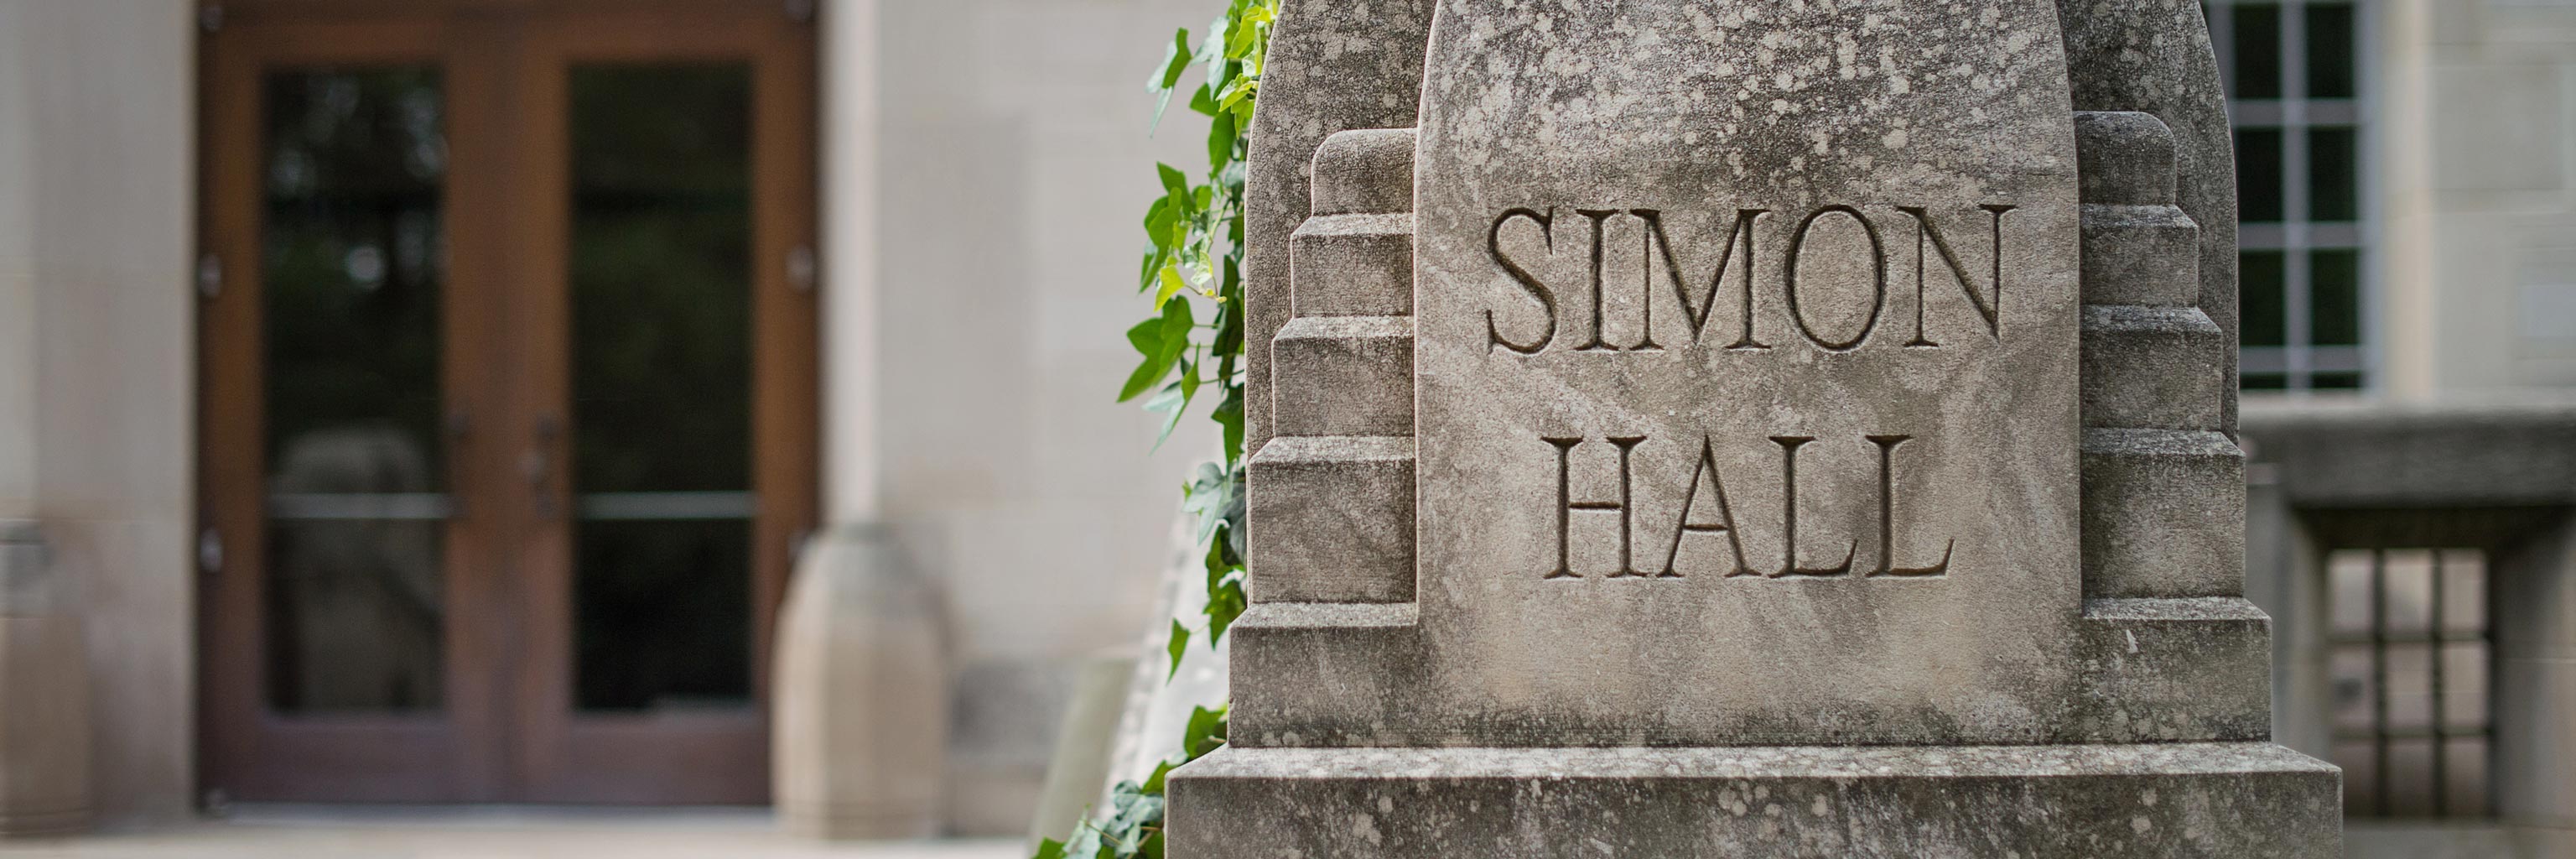 Simon Hall stone marker